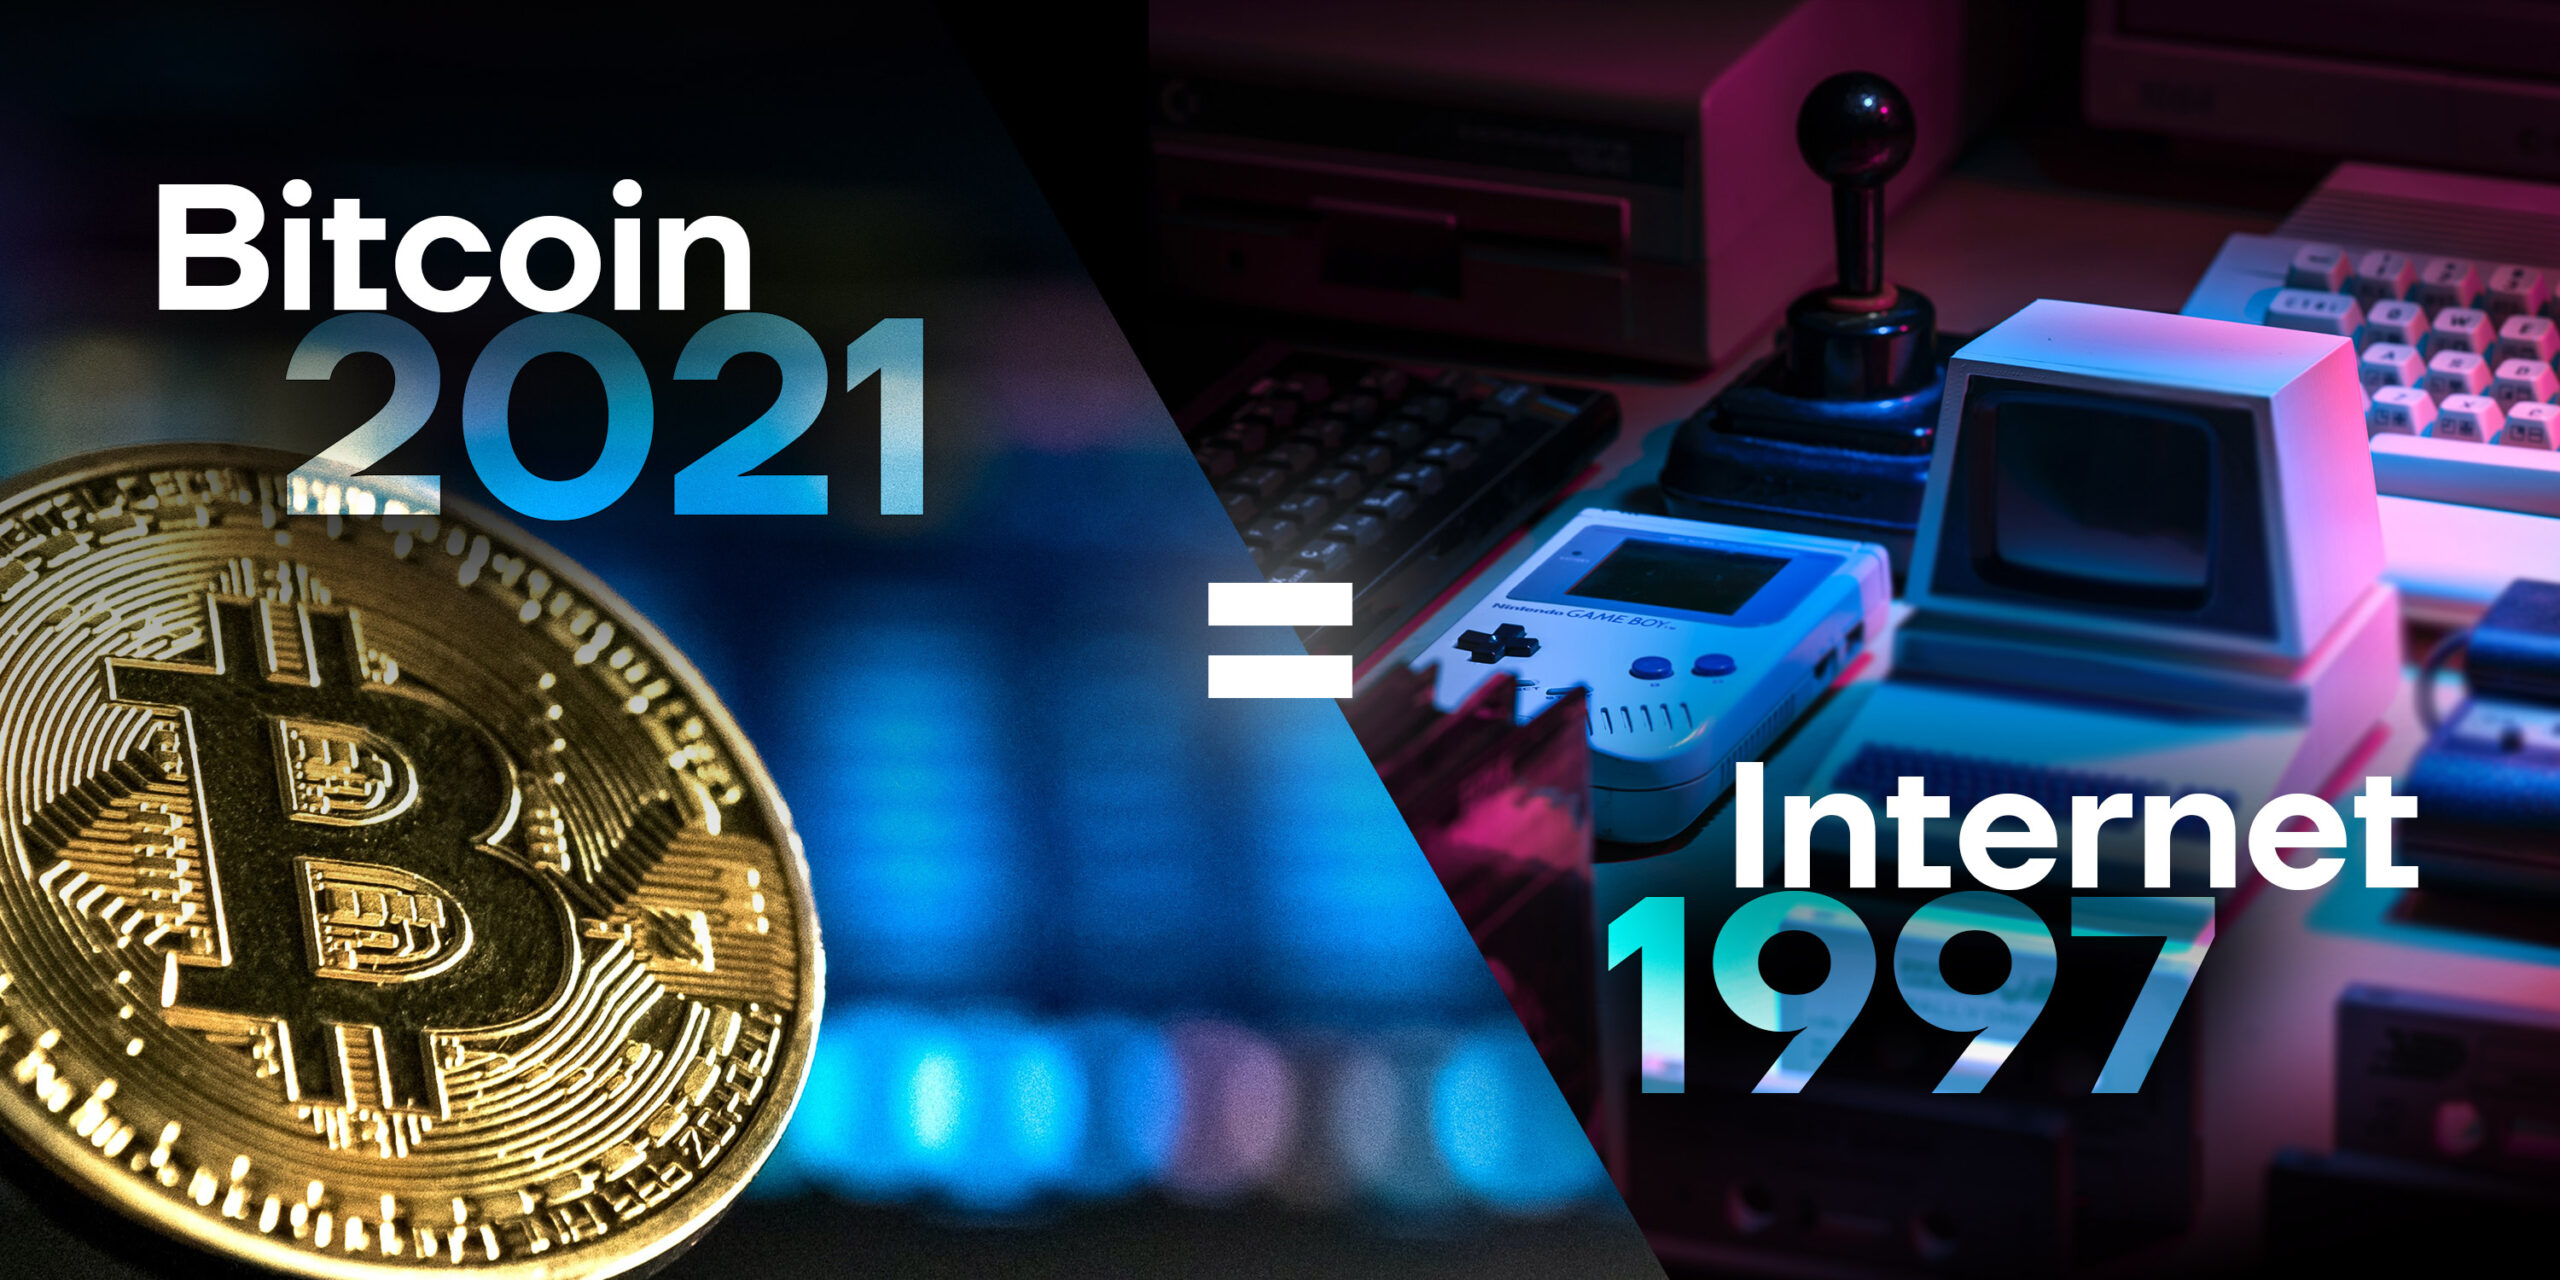 Bitcoin_2021_equals_Internet_1997